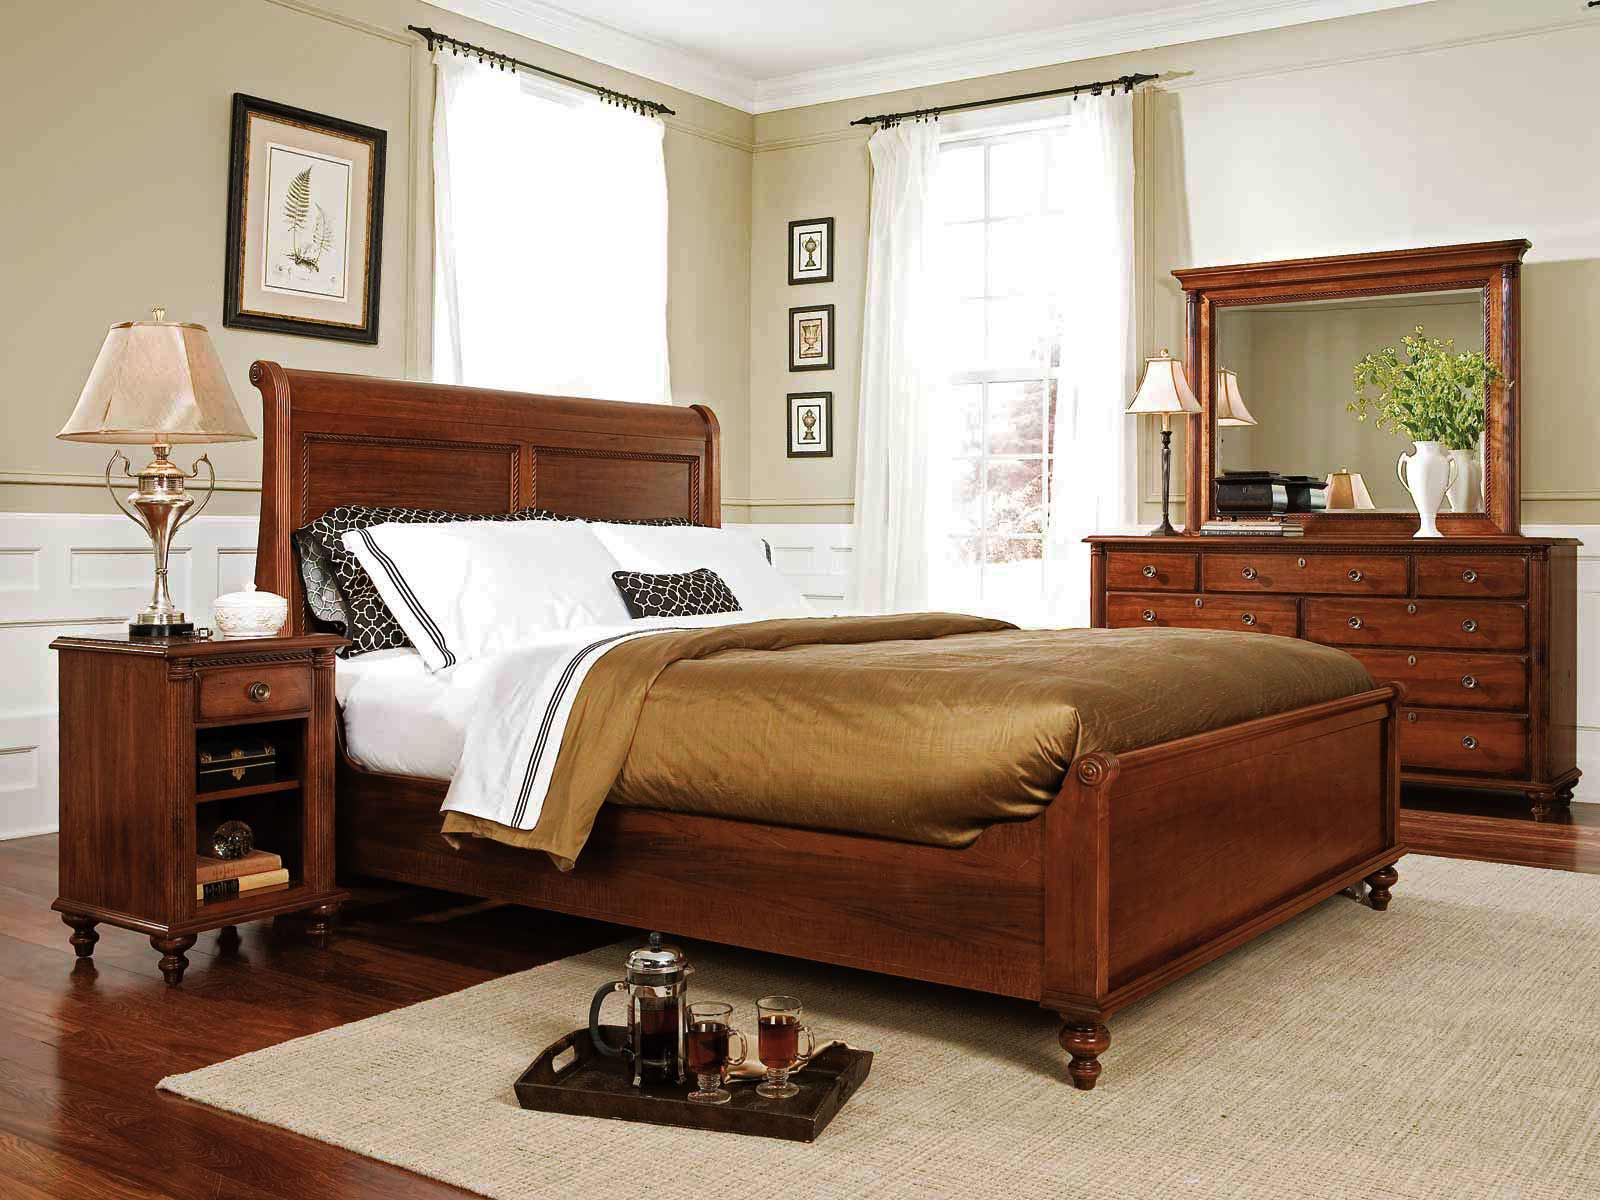 1950's mahogany bedroom furniture